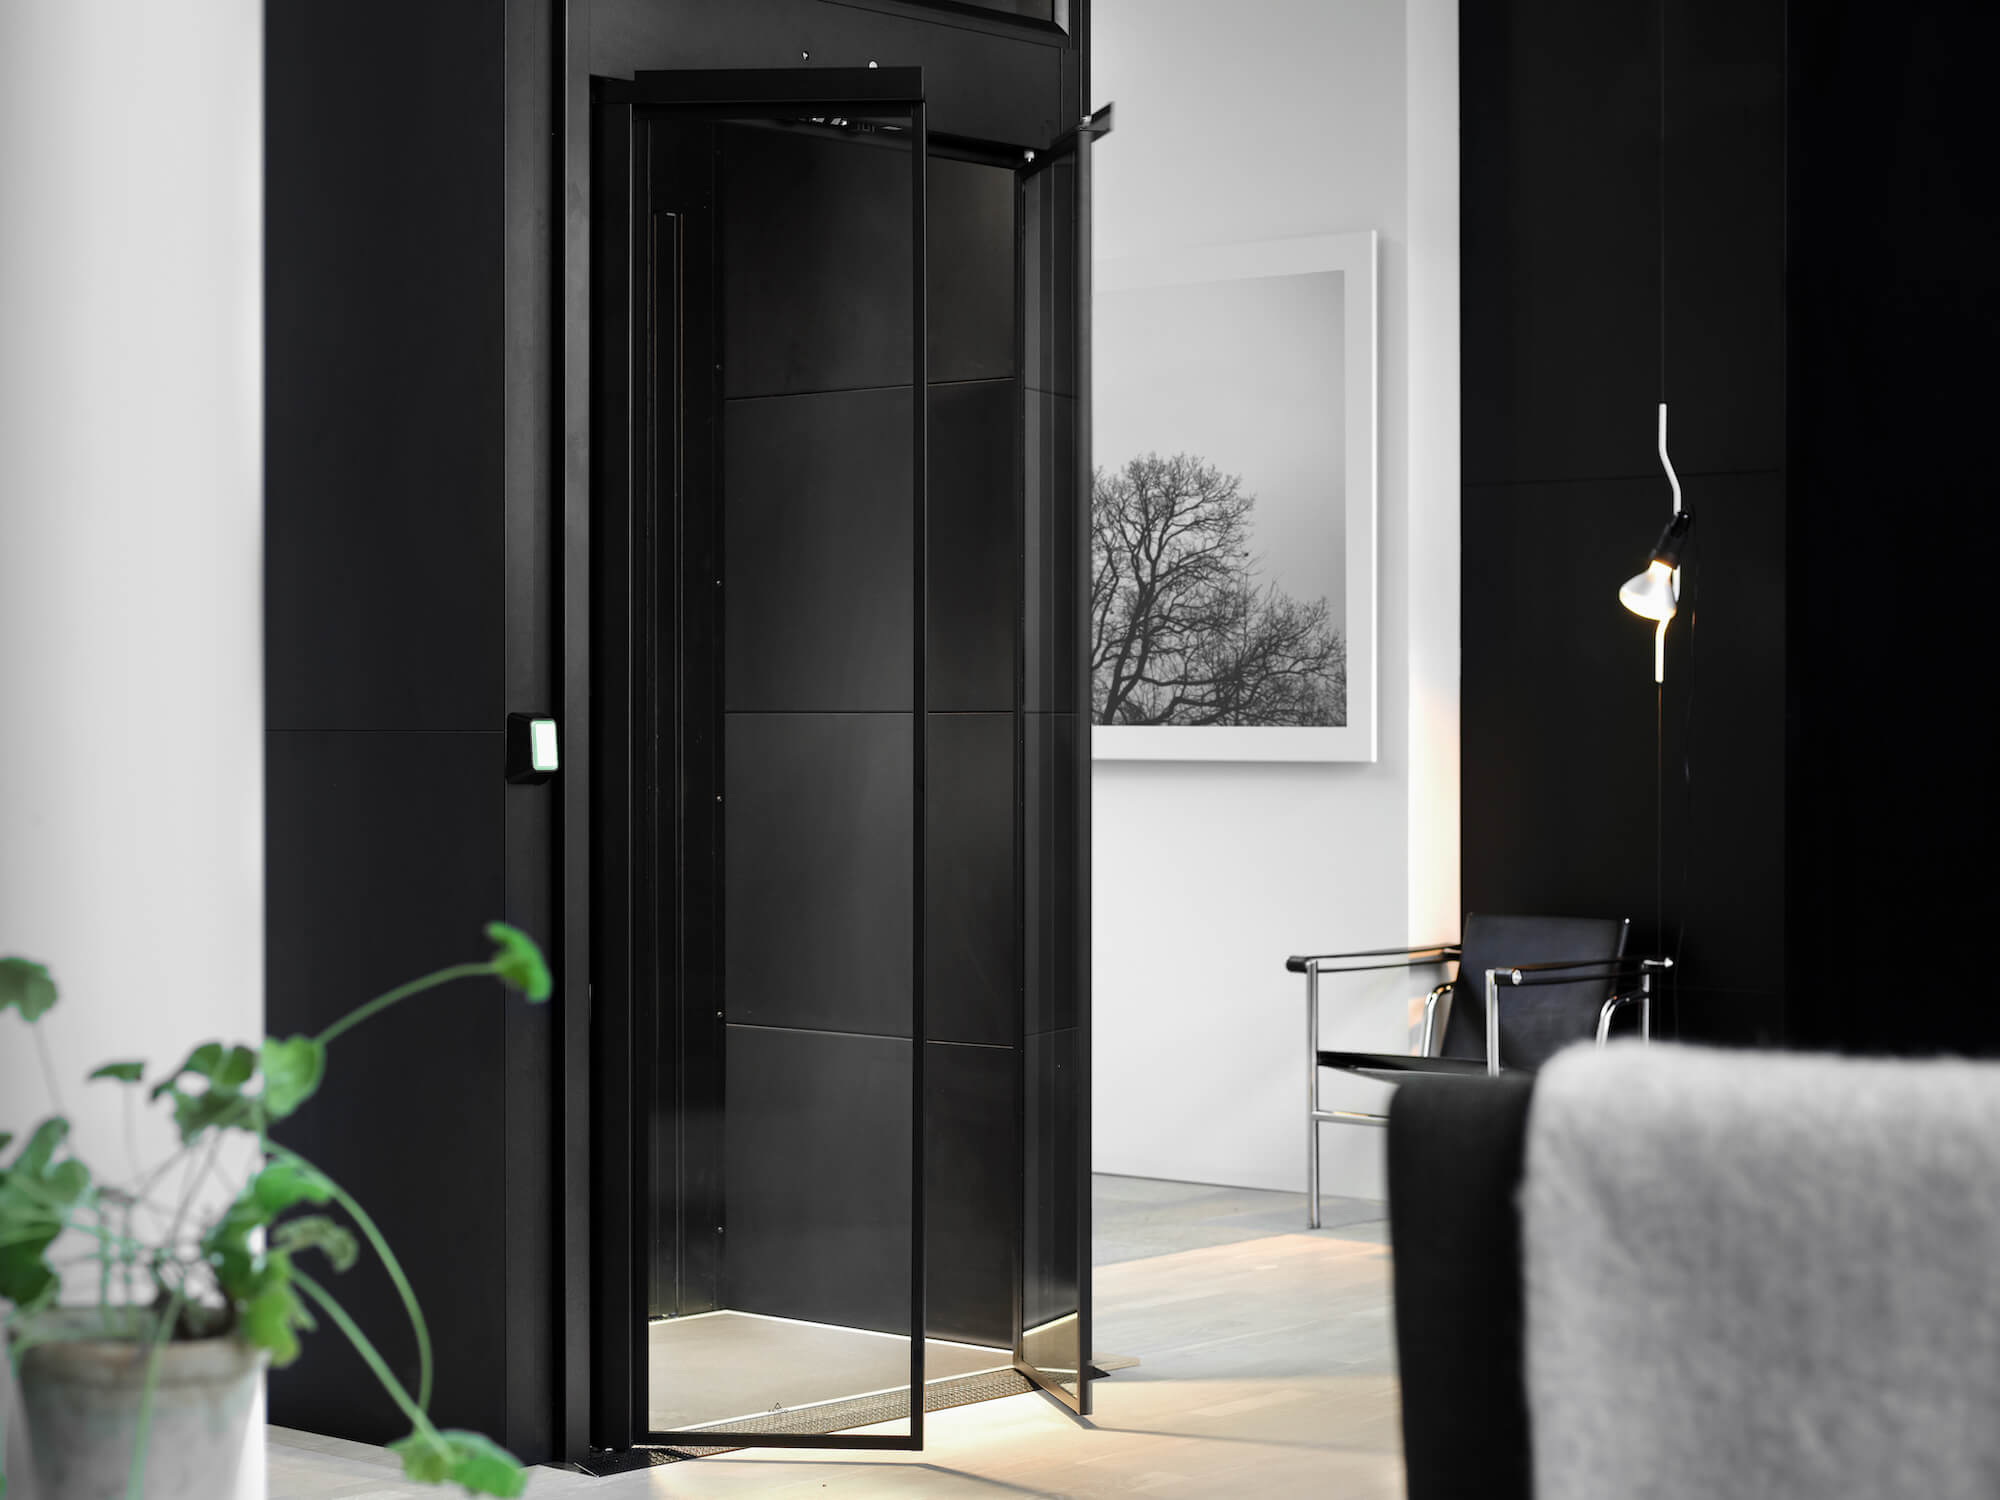 Aritco provides elevators for hotels. Here an Aritco 4000